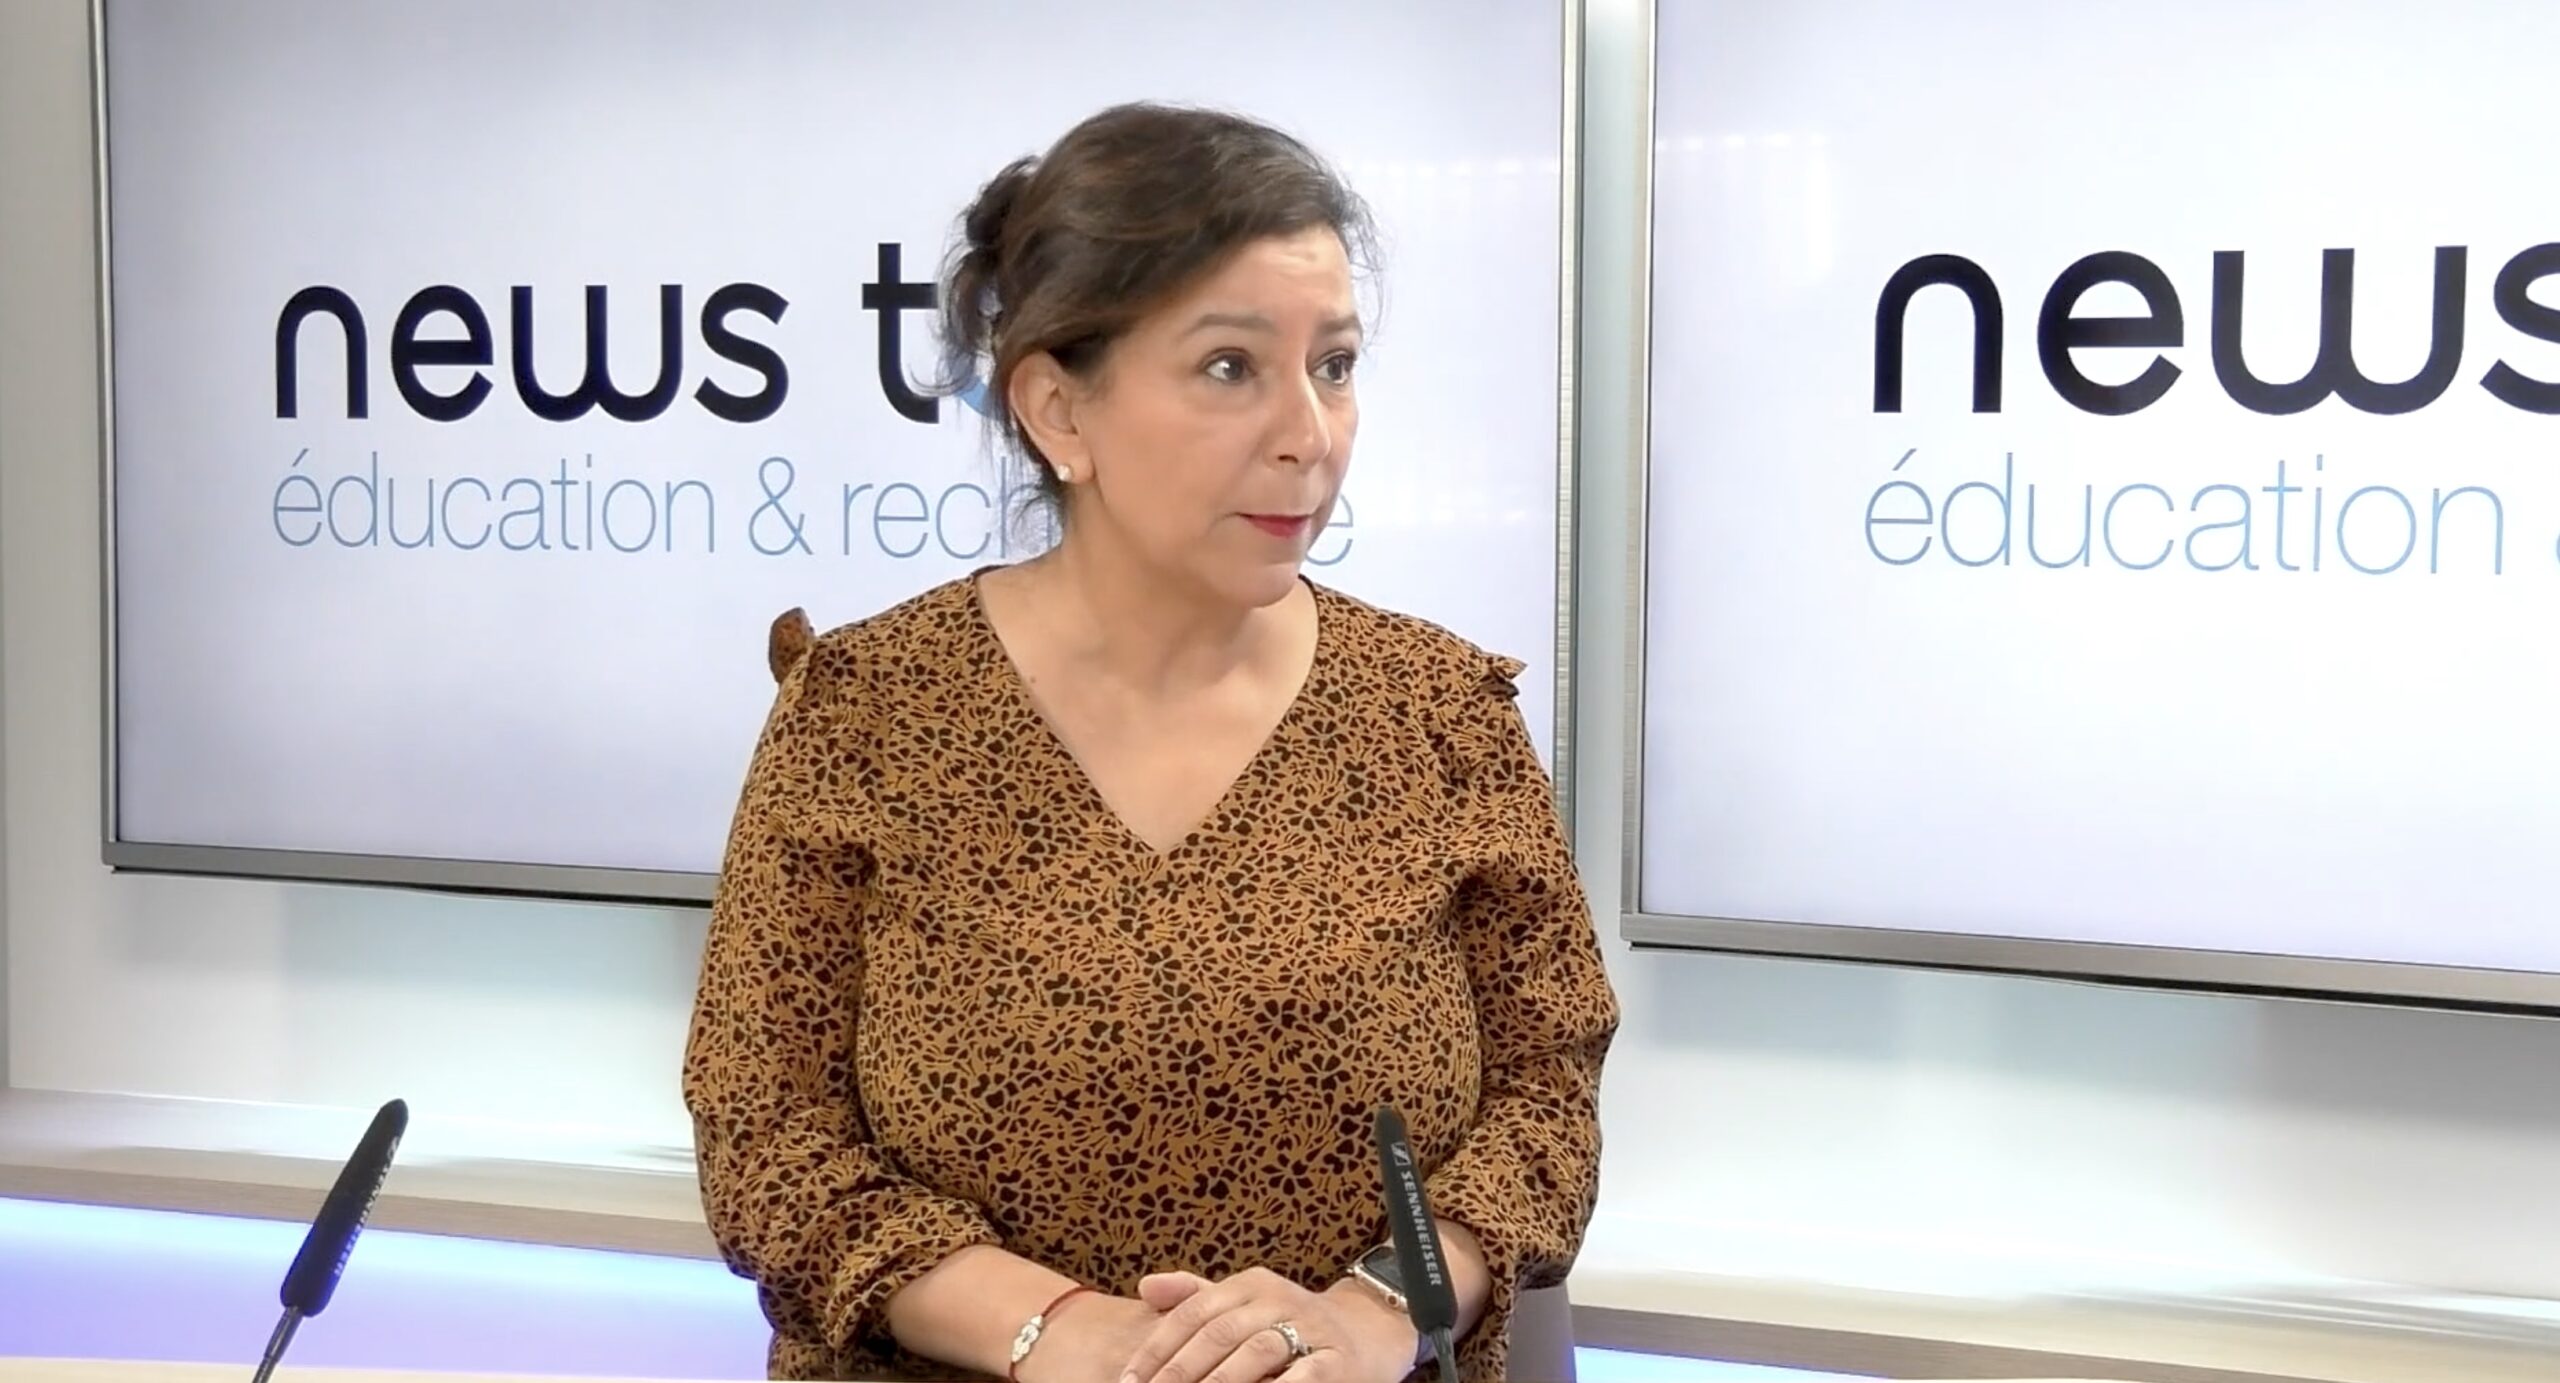 News Tank TV: news from Lamia Rouai, founder of Lynx Educate